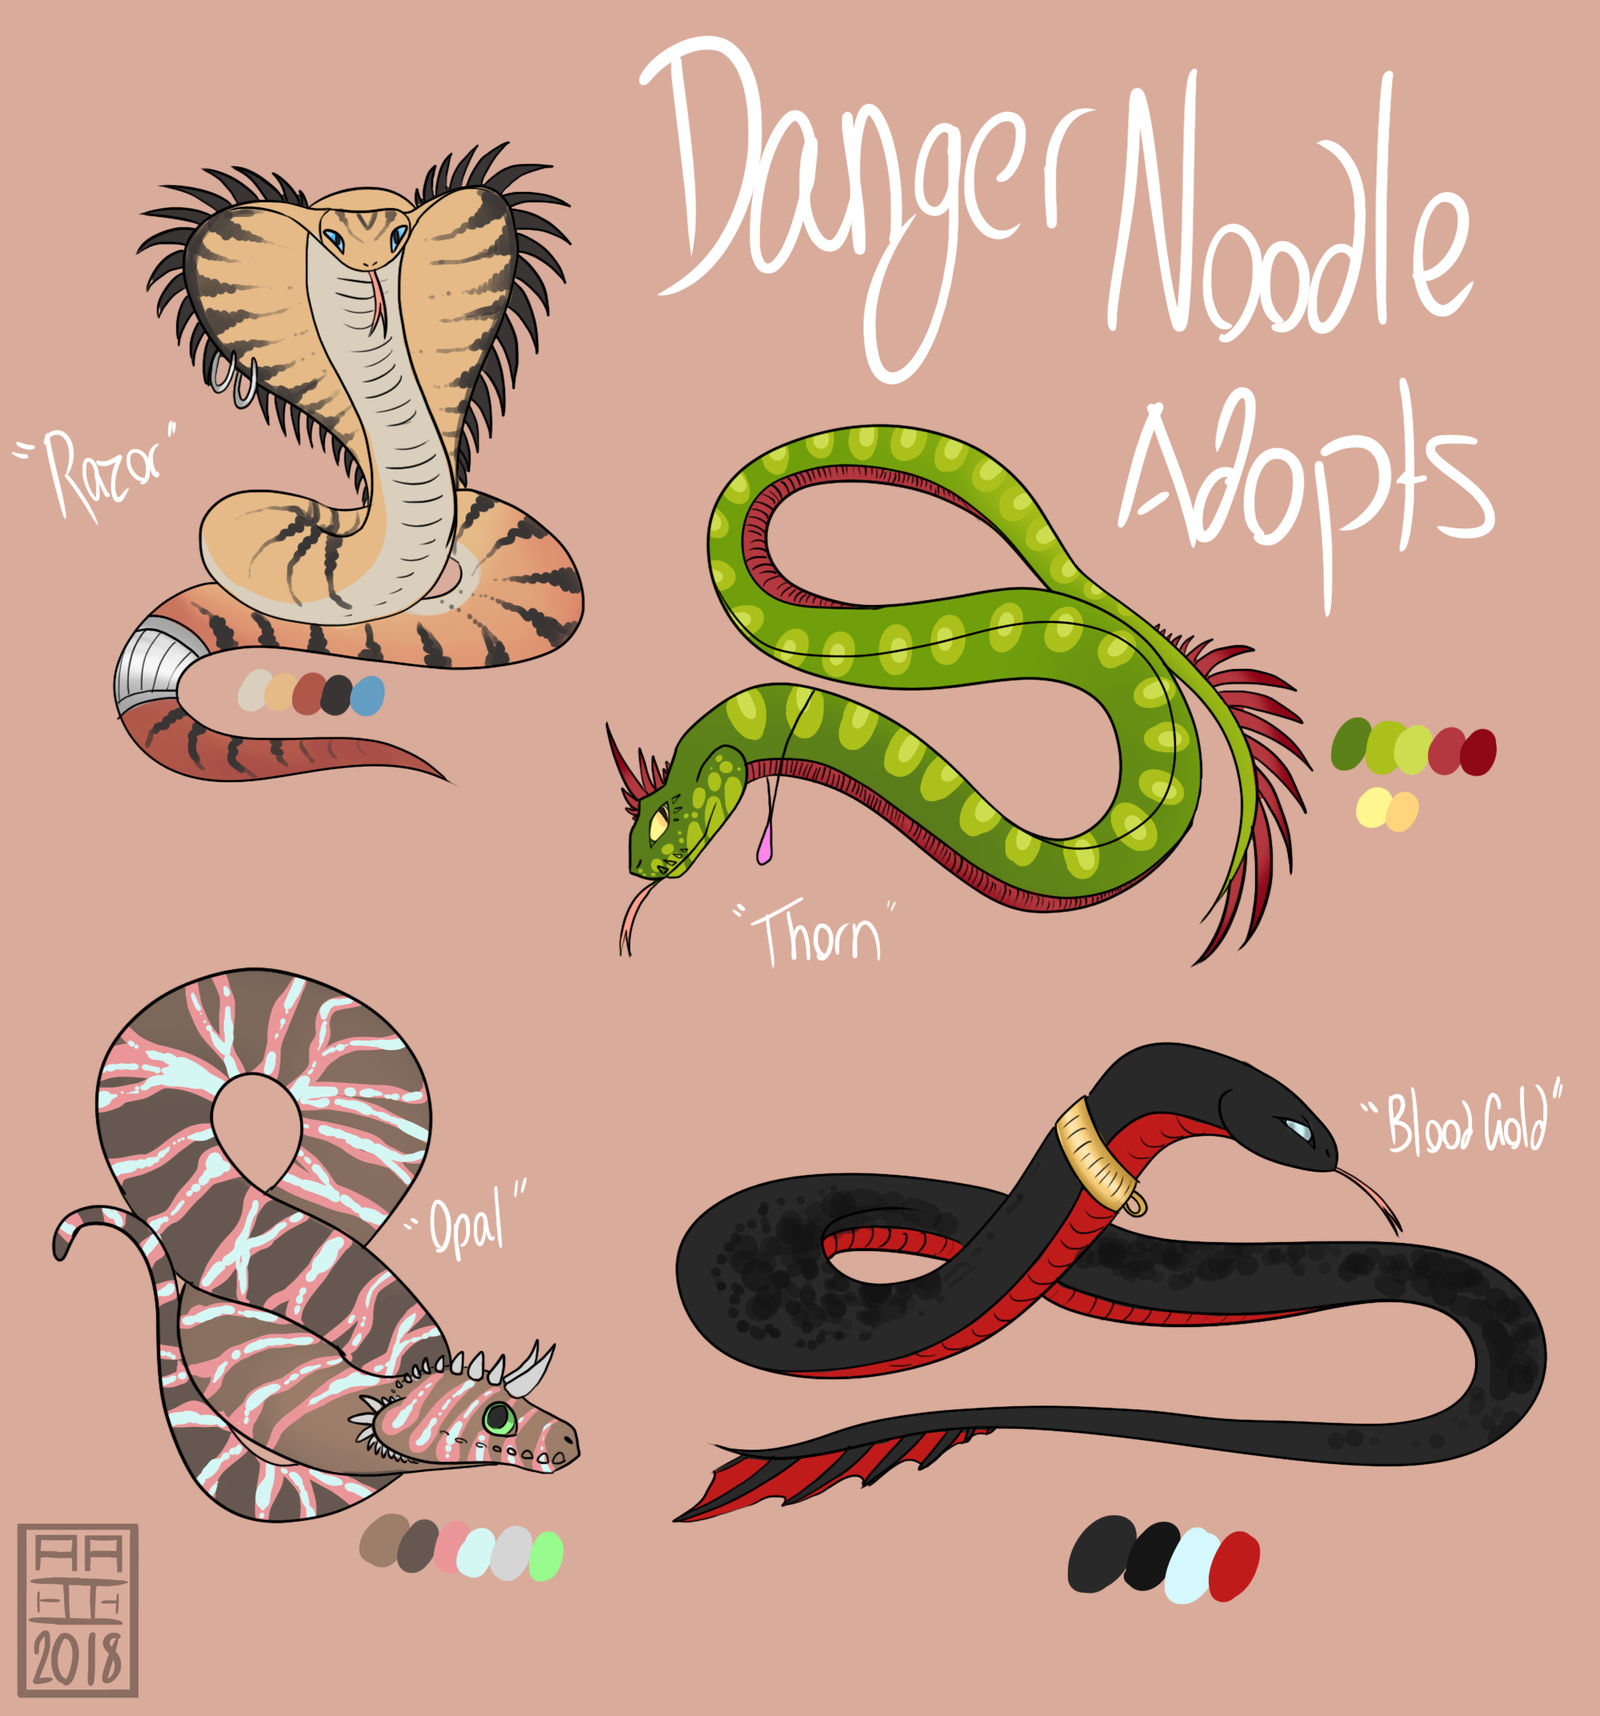 Danger Noodle Adopts! by Aryjak on DeviantArt